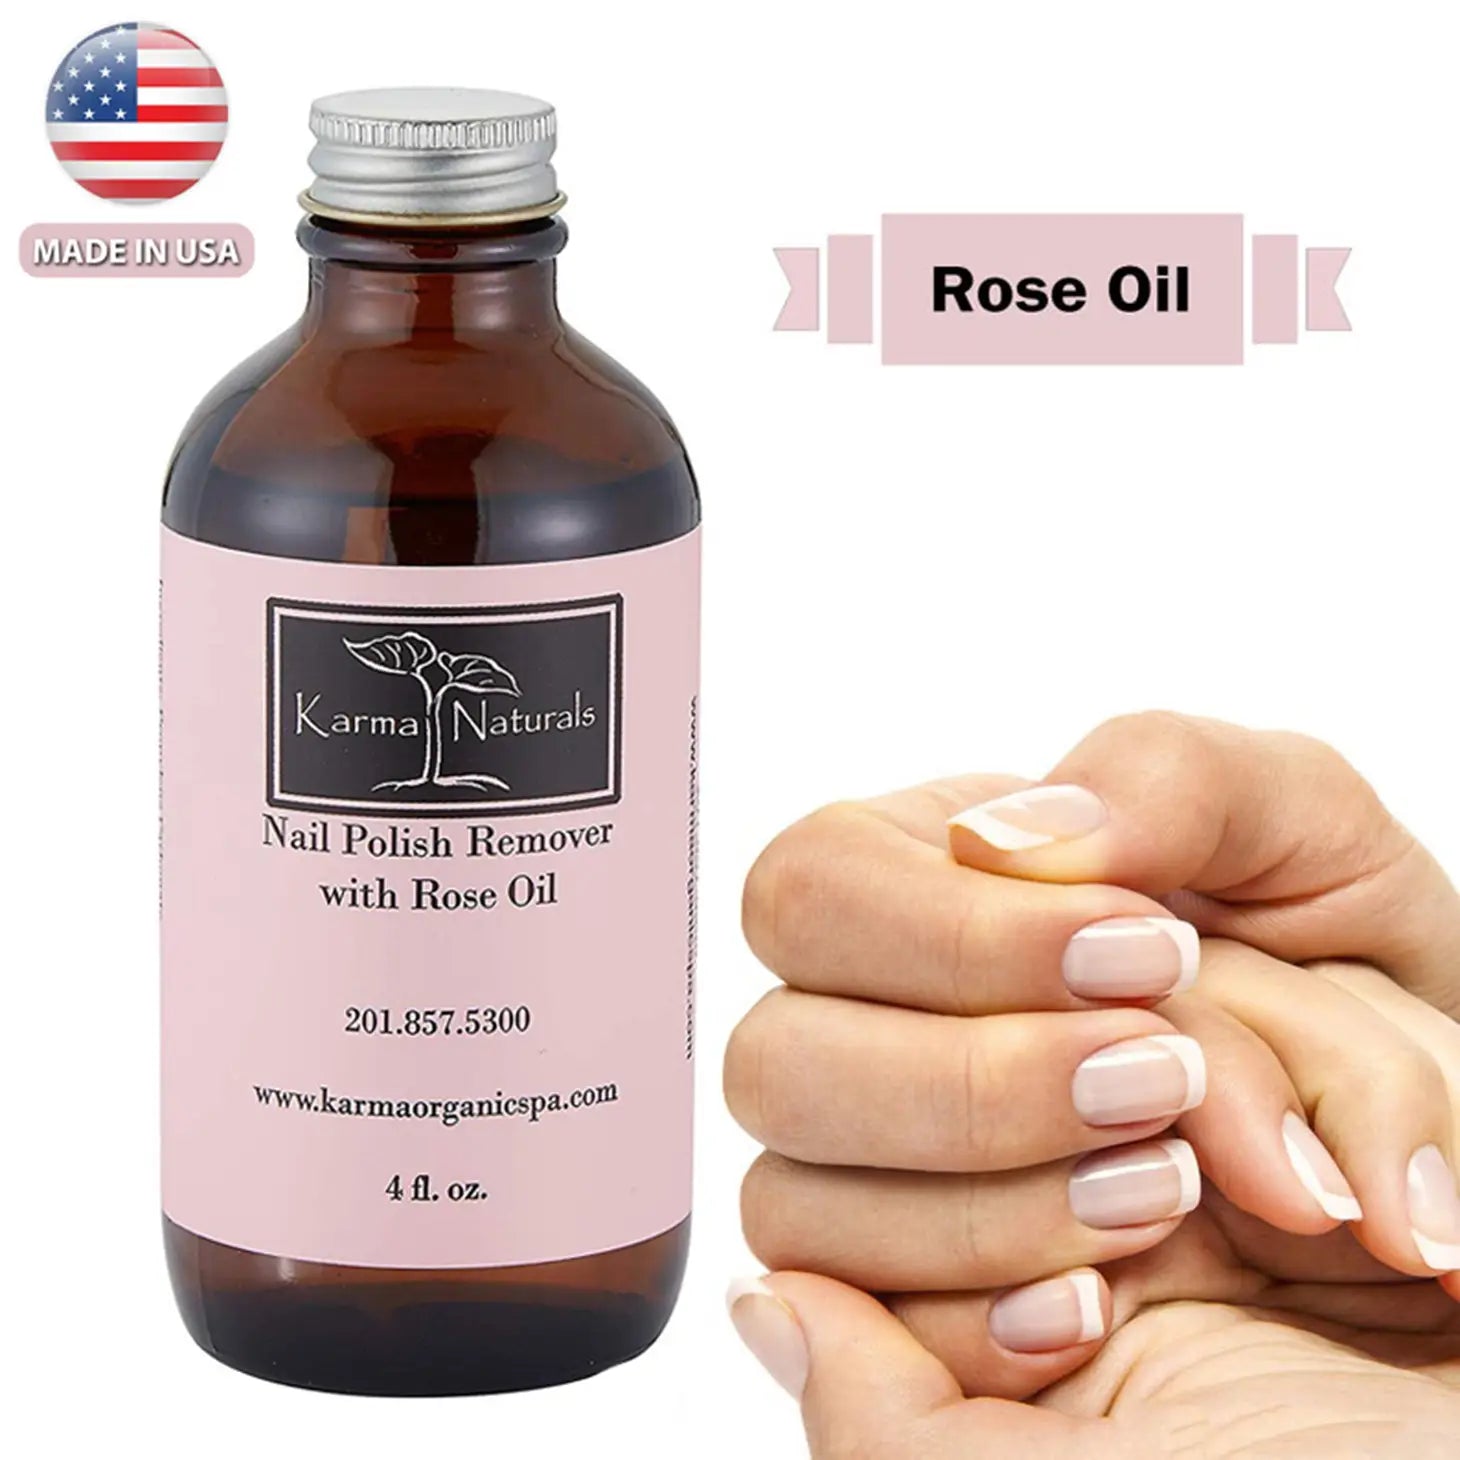 Karma Organic Spa - Rose Oil Nail Polish Remover